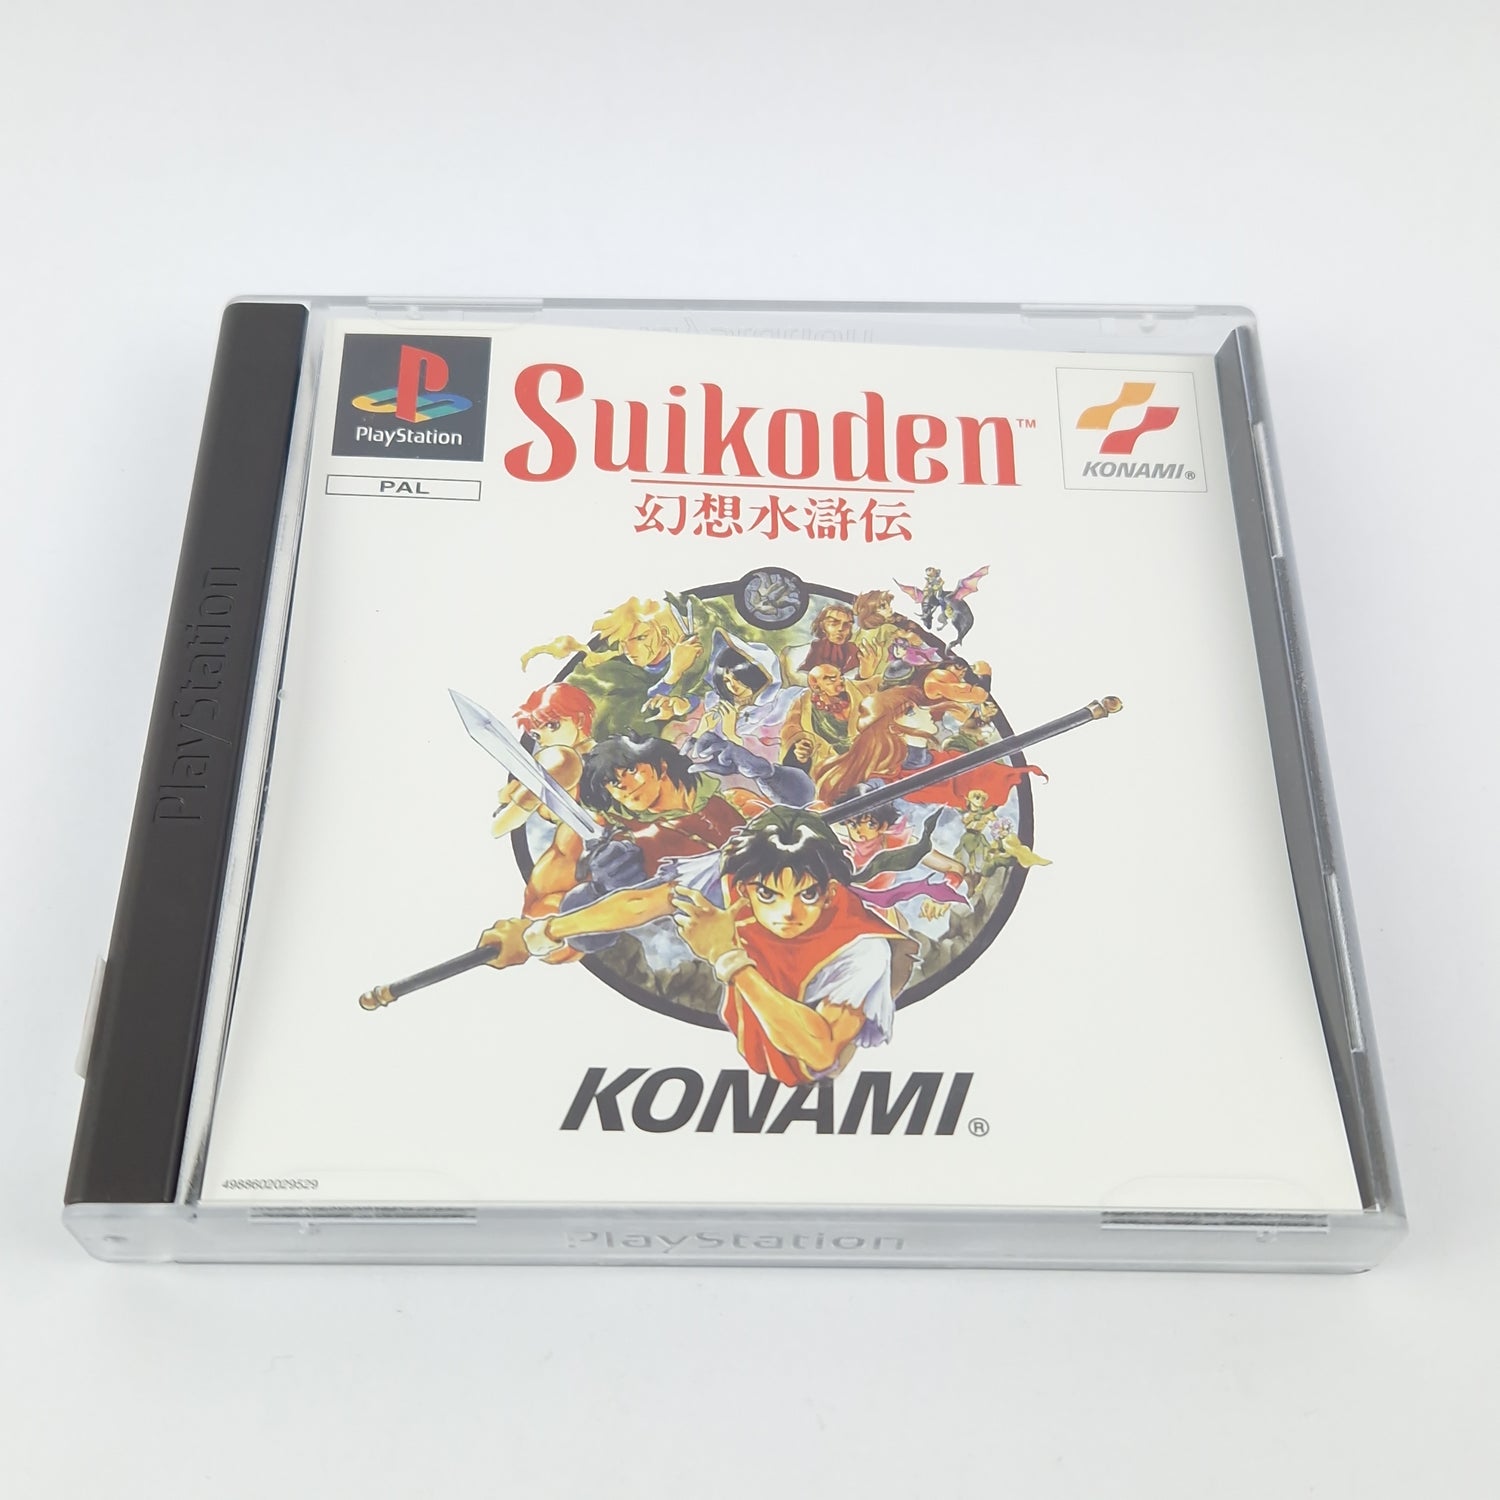 Playstation 1 Spiel : Suikoden - CD Anleitung OVP SONY PS1 PSX PAL Konami